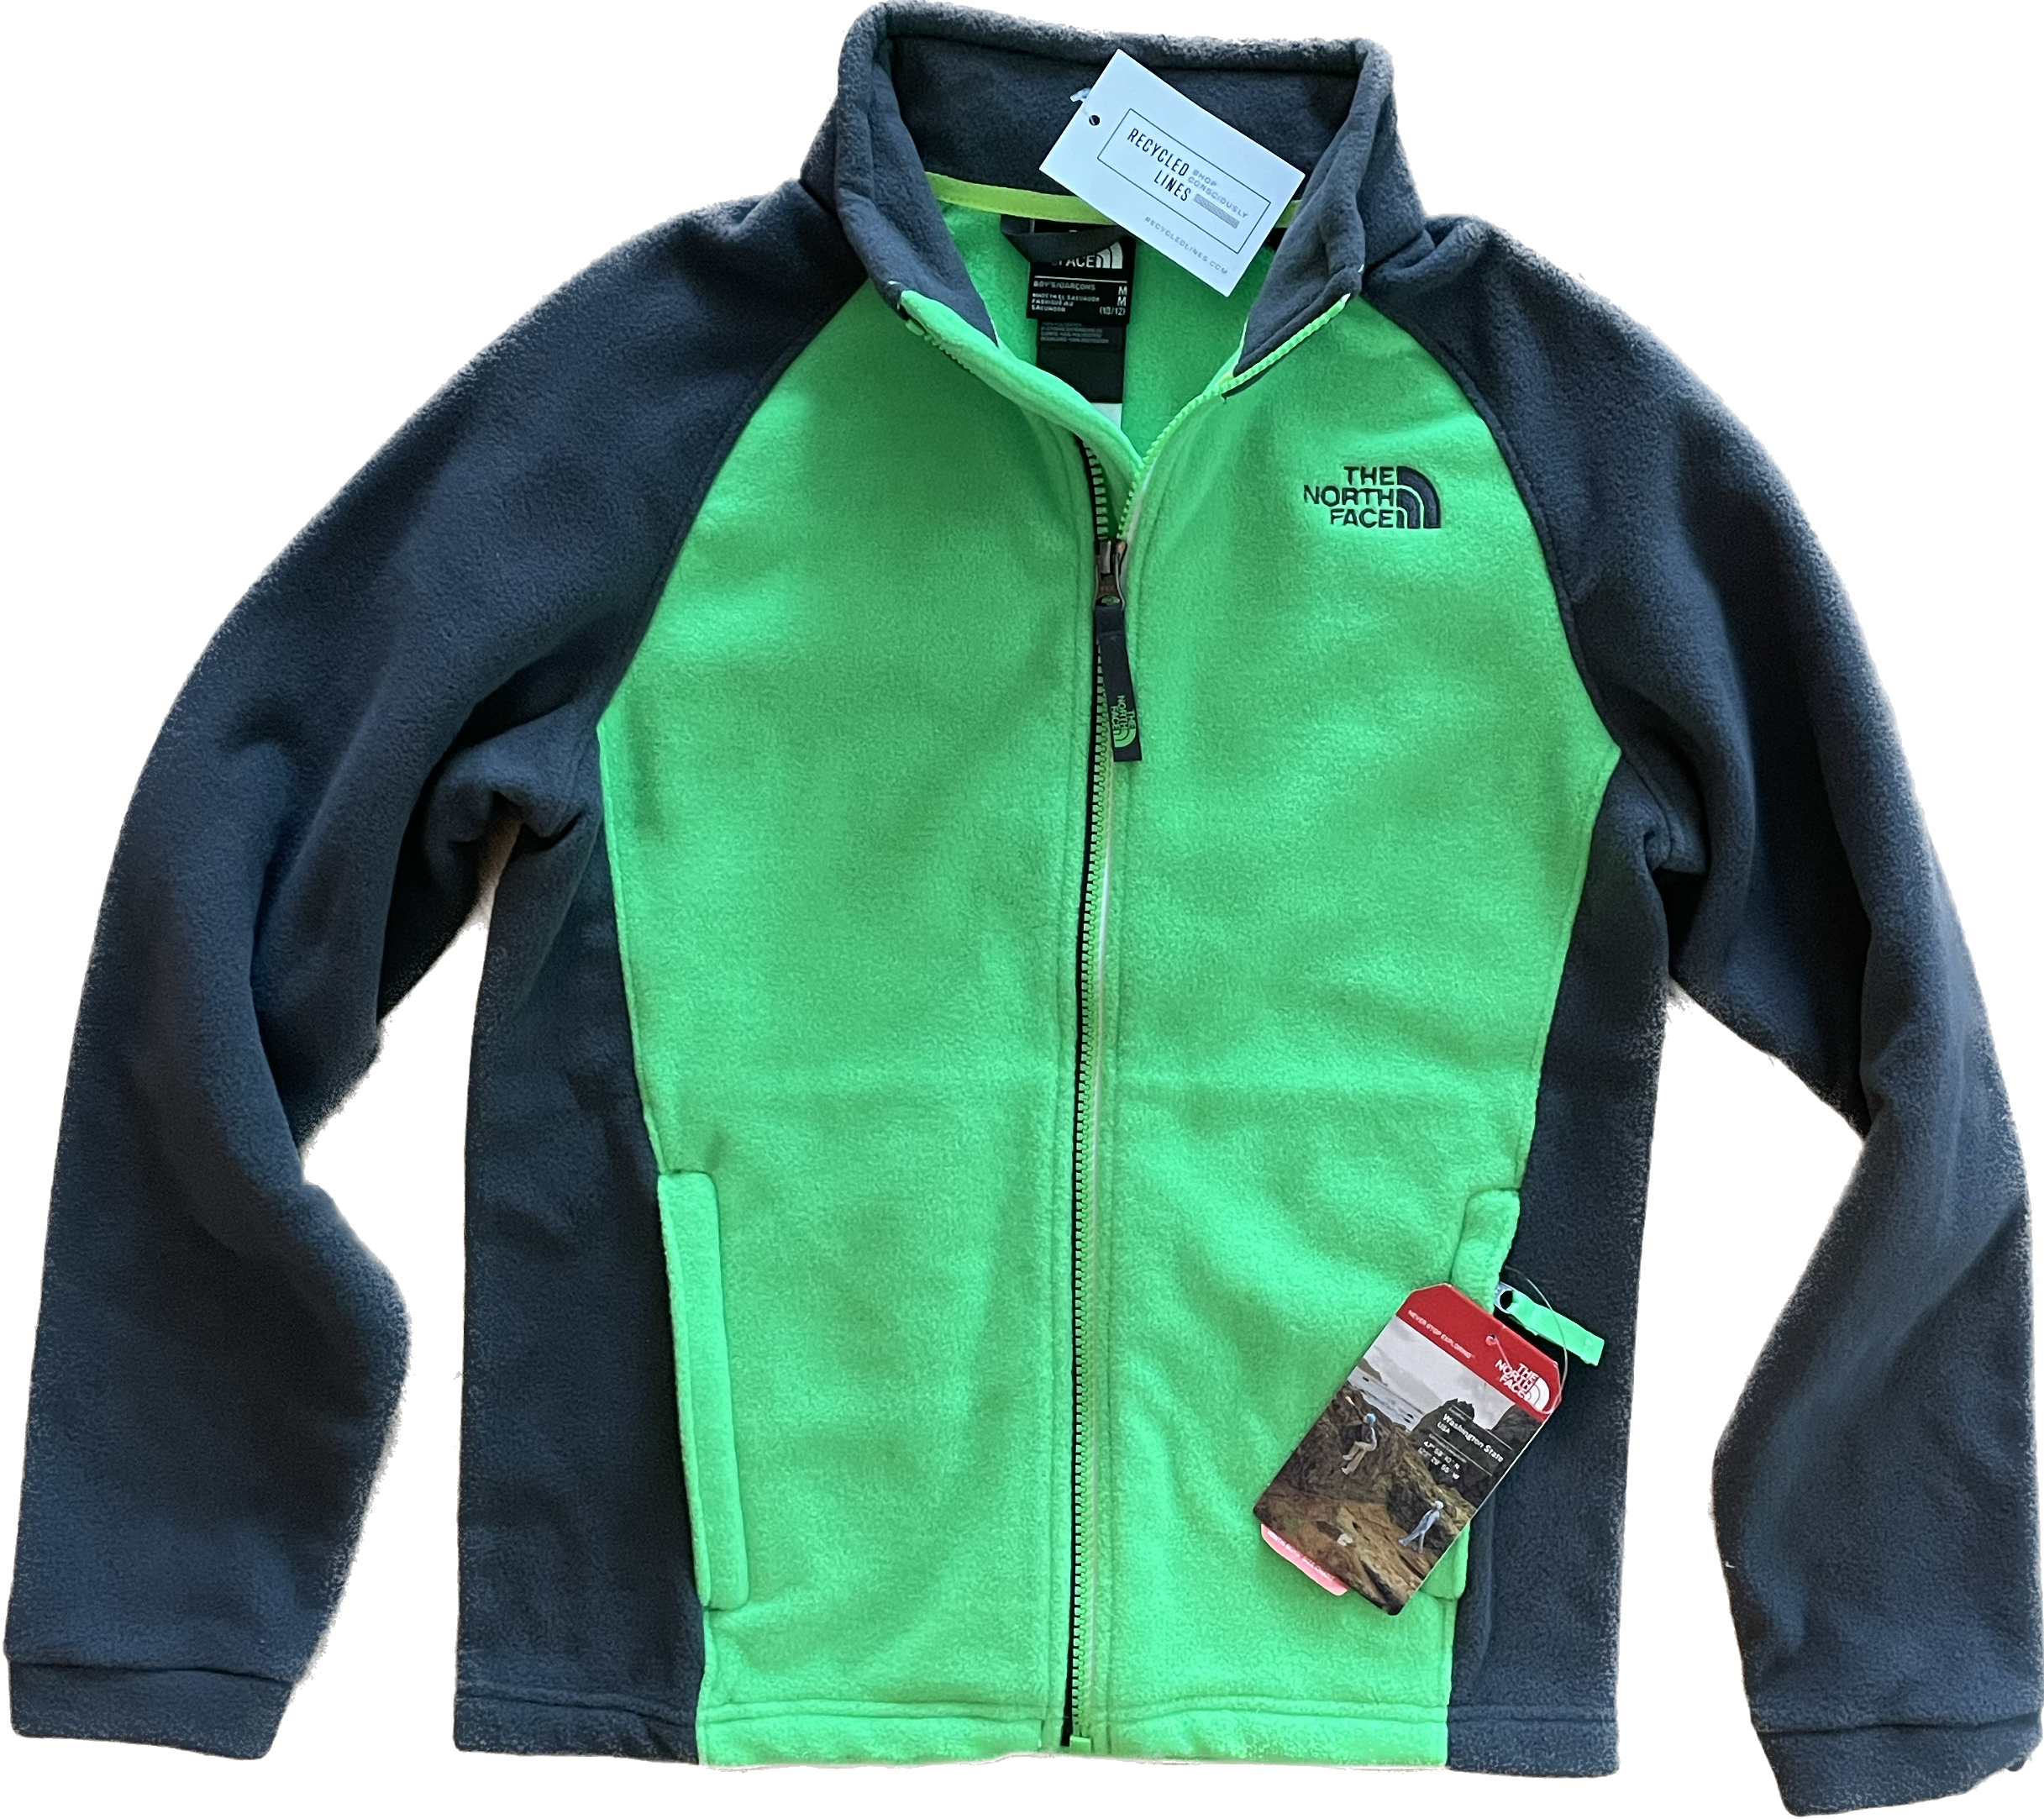 The North Face NWT Fleece Jacket, Neon Green/Gray Boys Size M (1012)